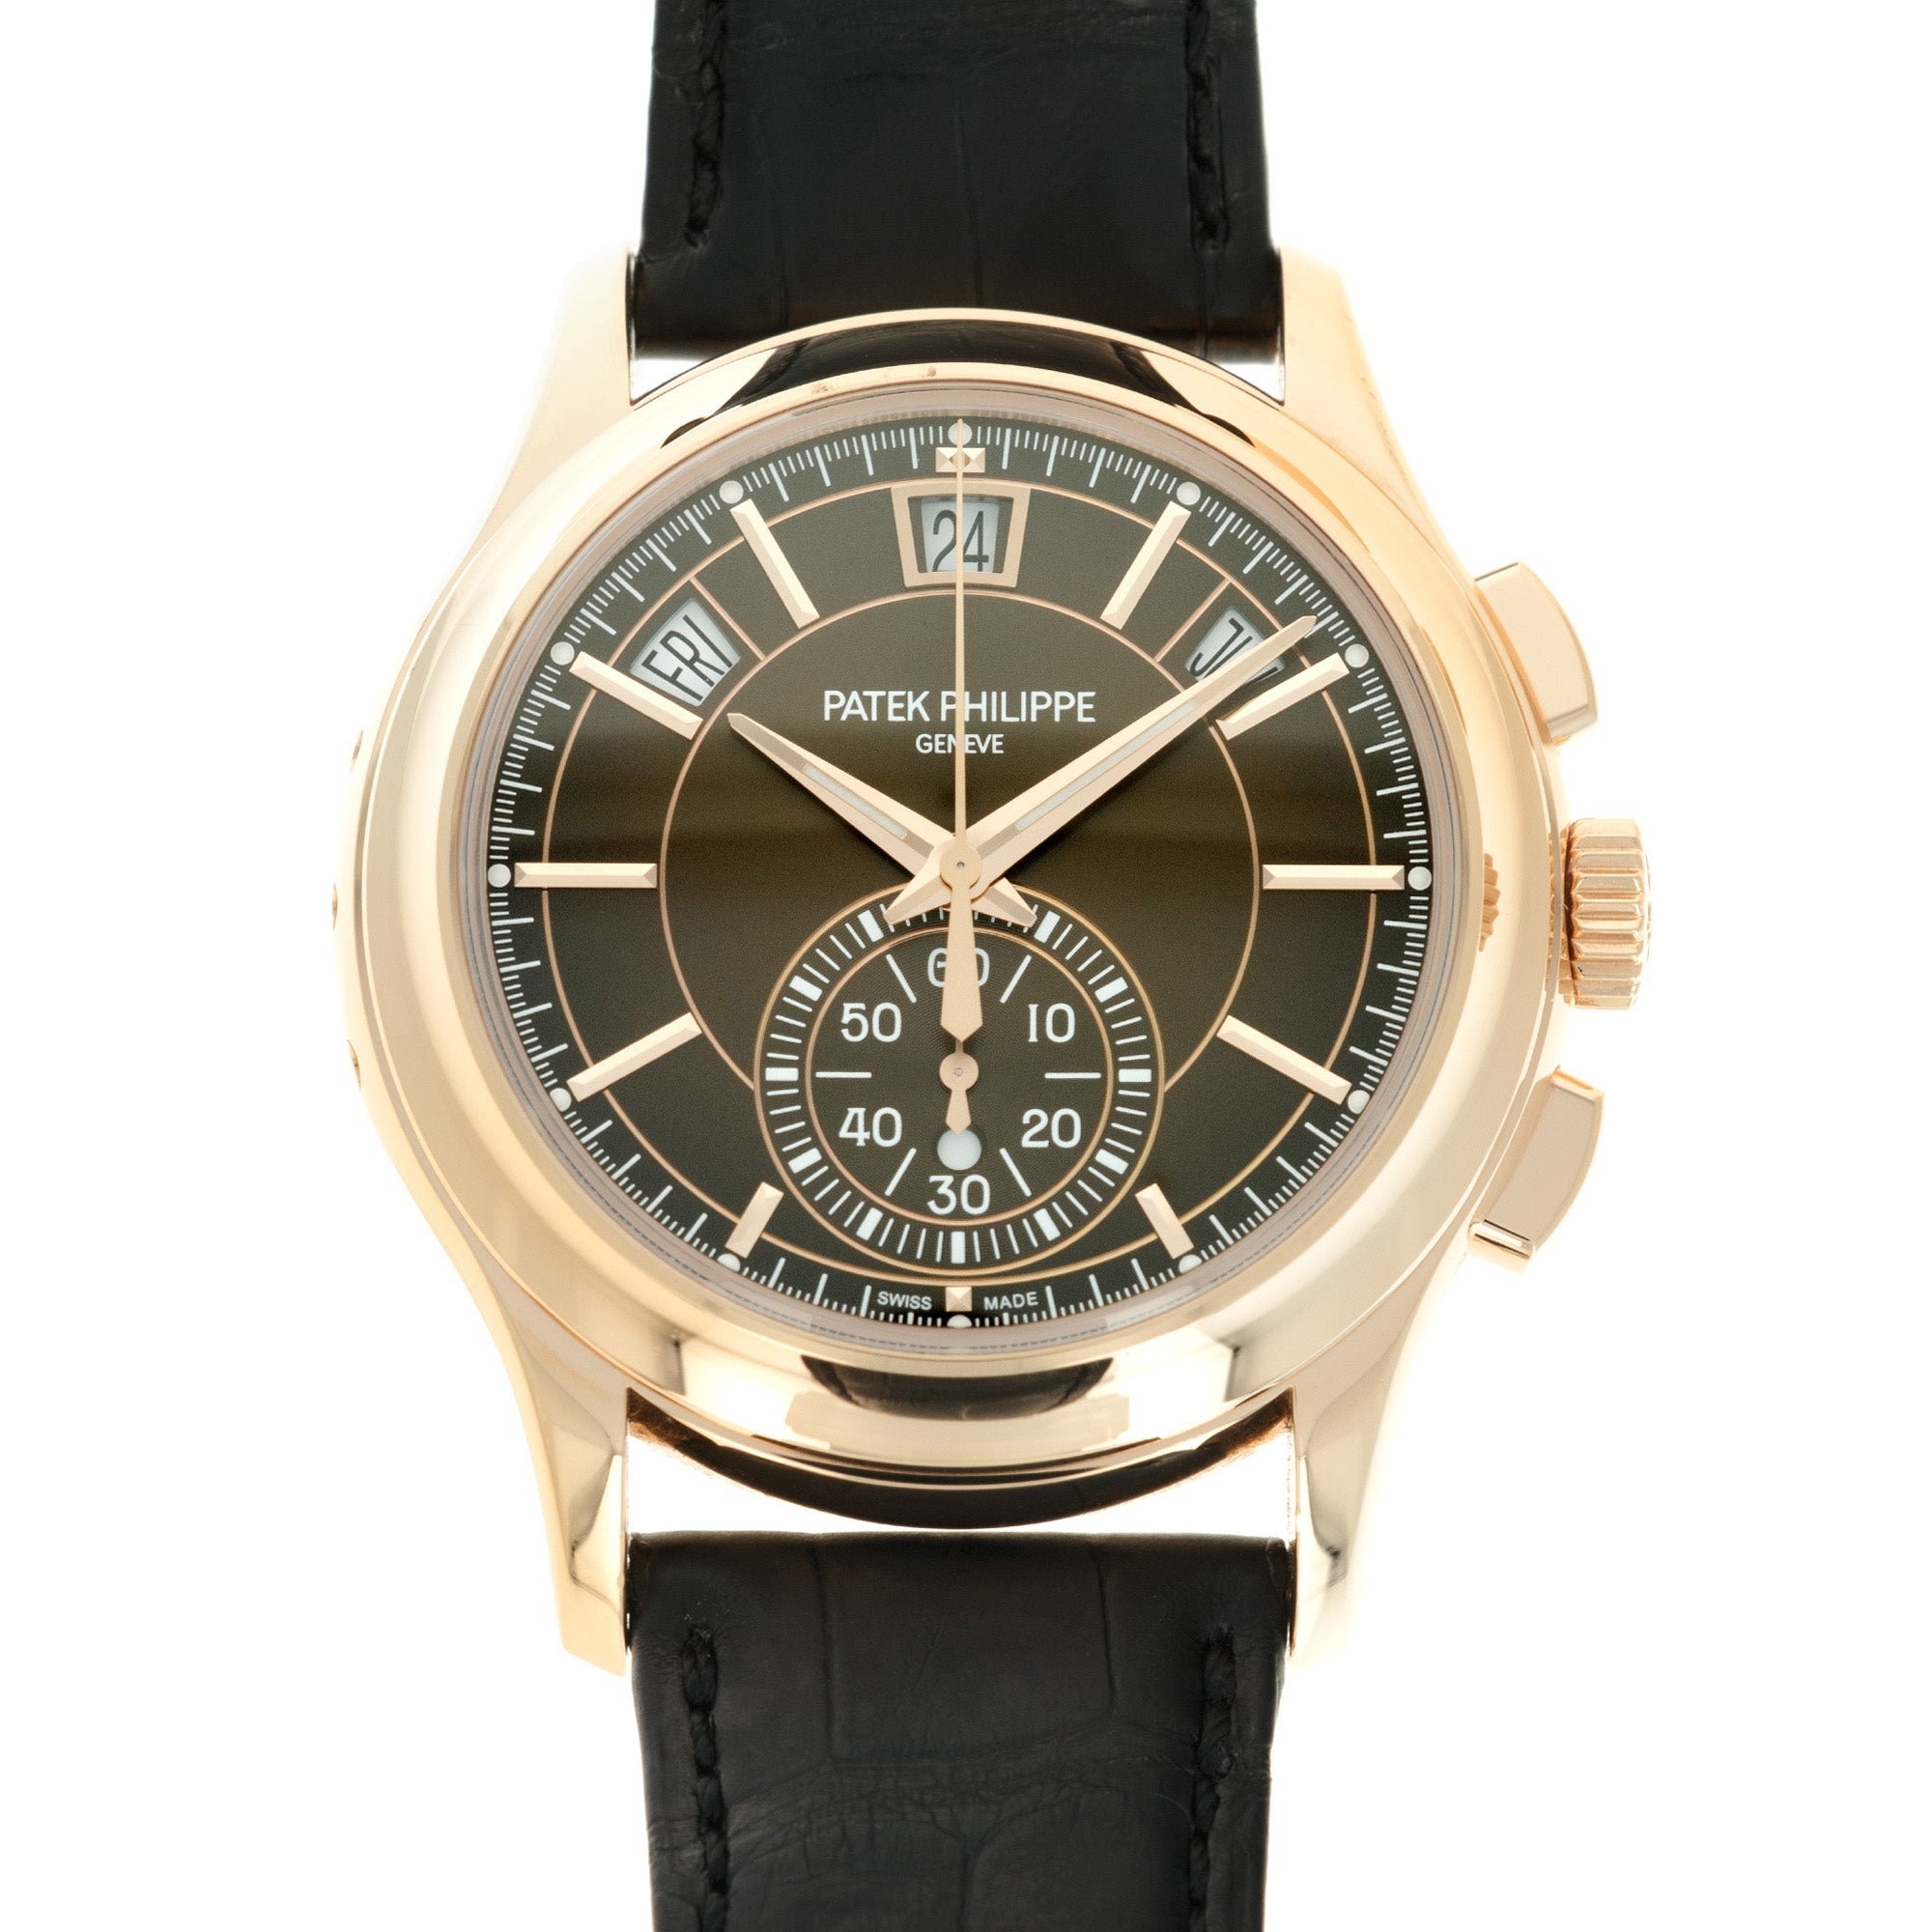 Patek Philippe - Patek Philippe Annual Calendar Chronograph Watch Ref. 5905 - The Keystone Watches